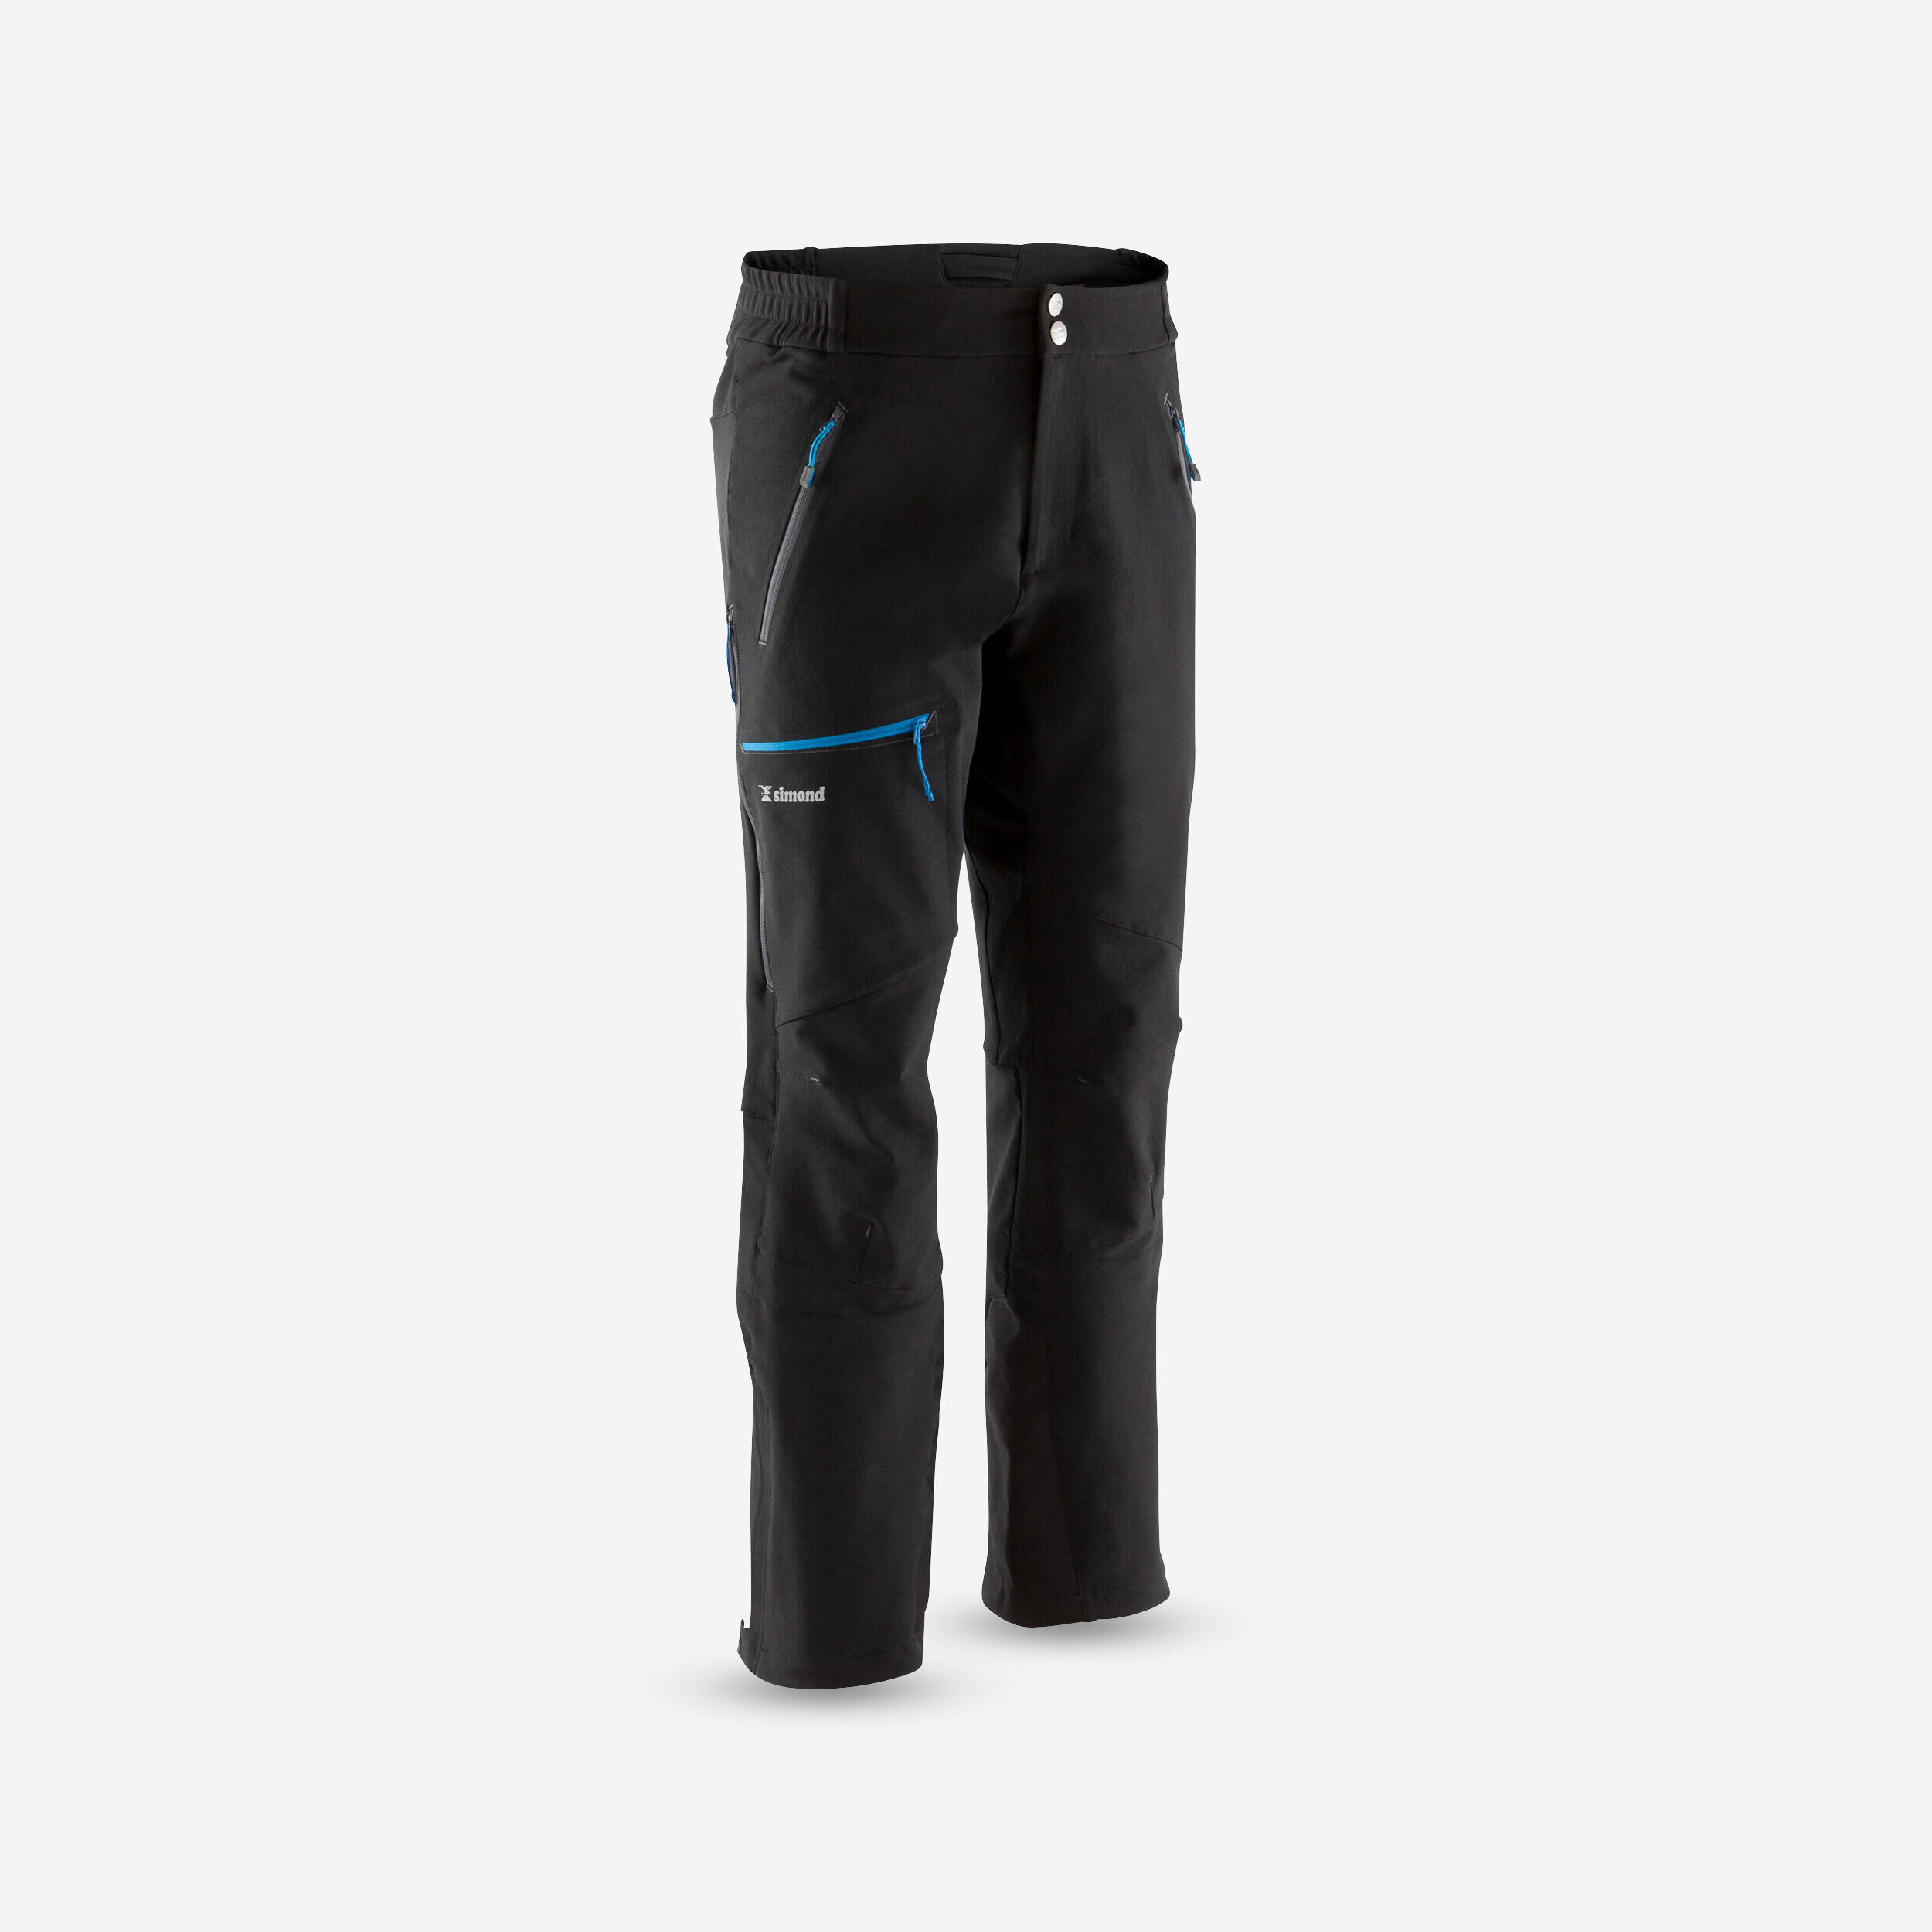 SIMOND Men’s durable windproof mountaineering trousers, black